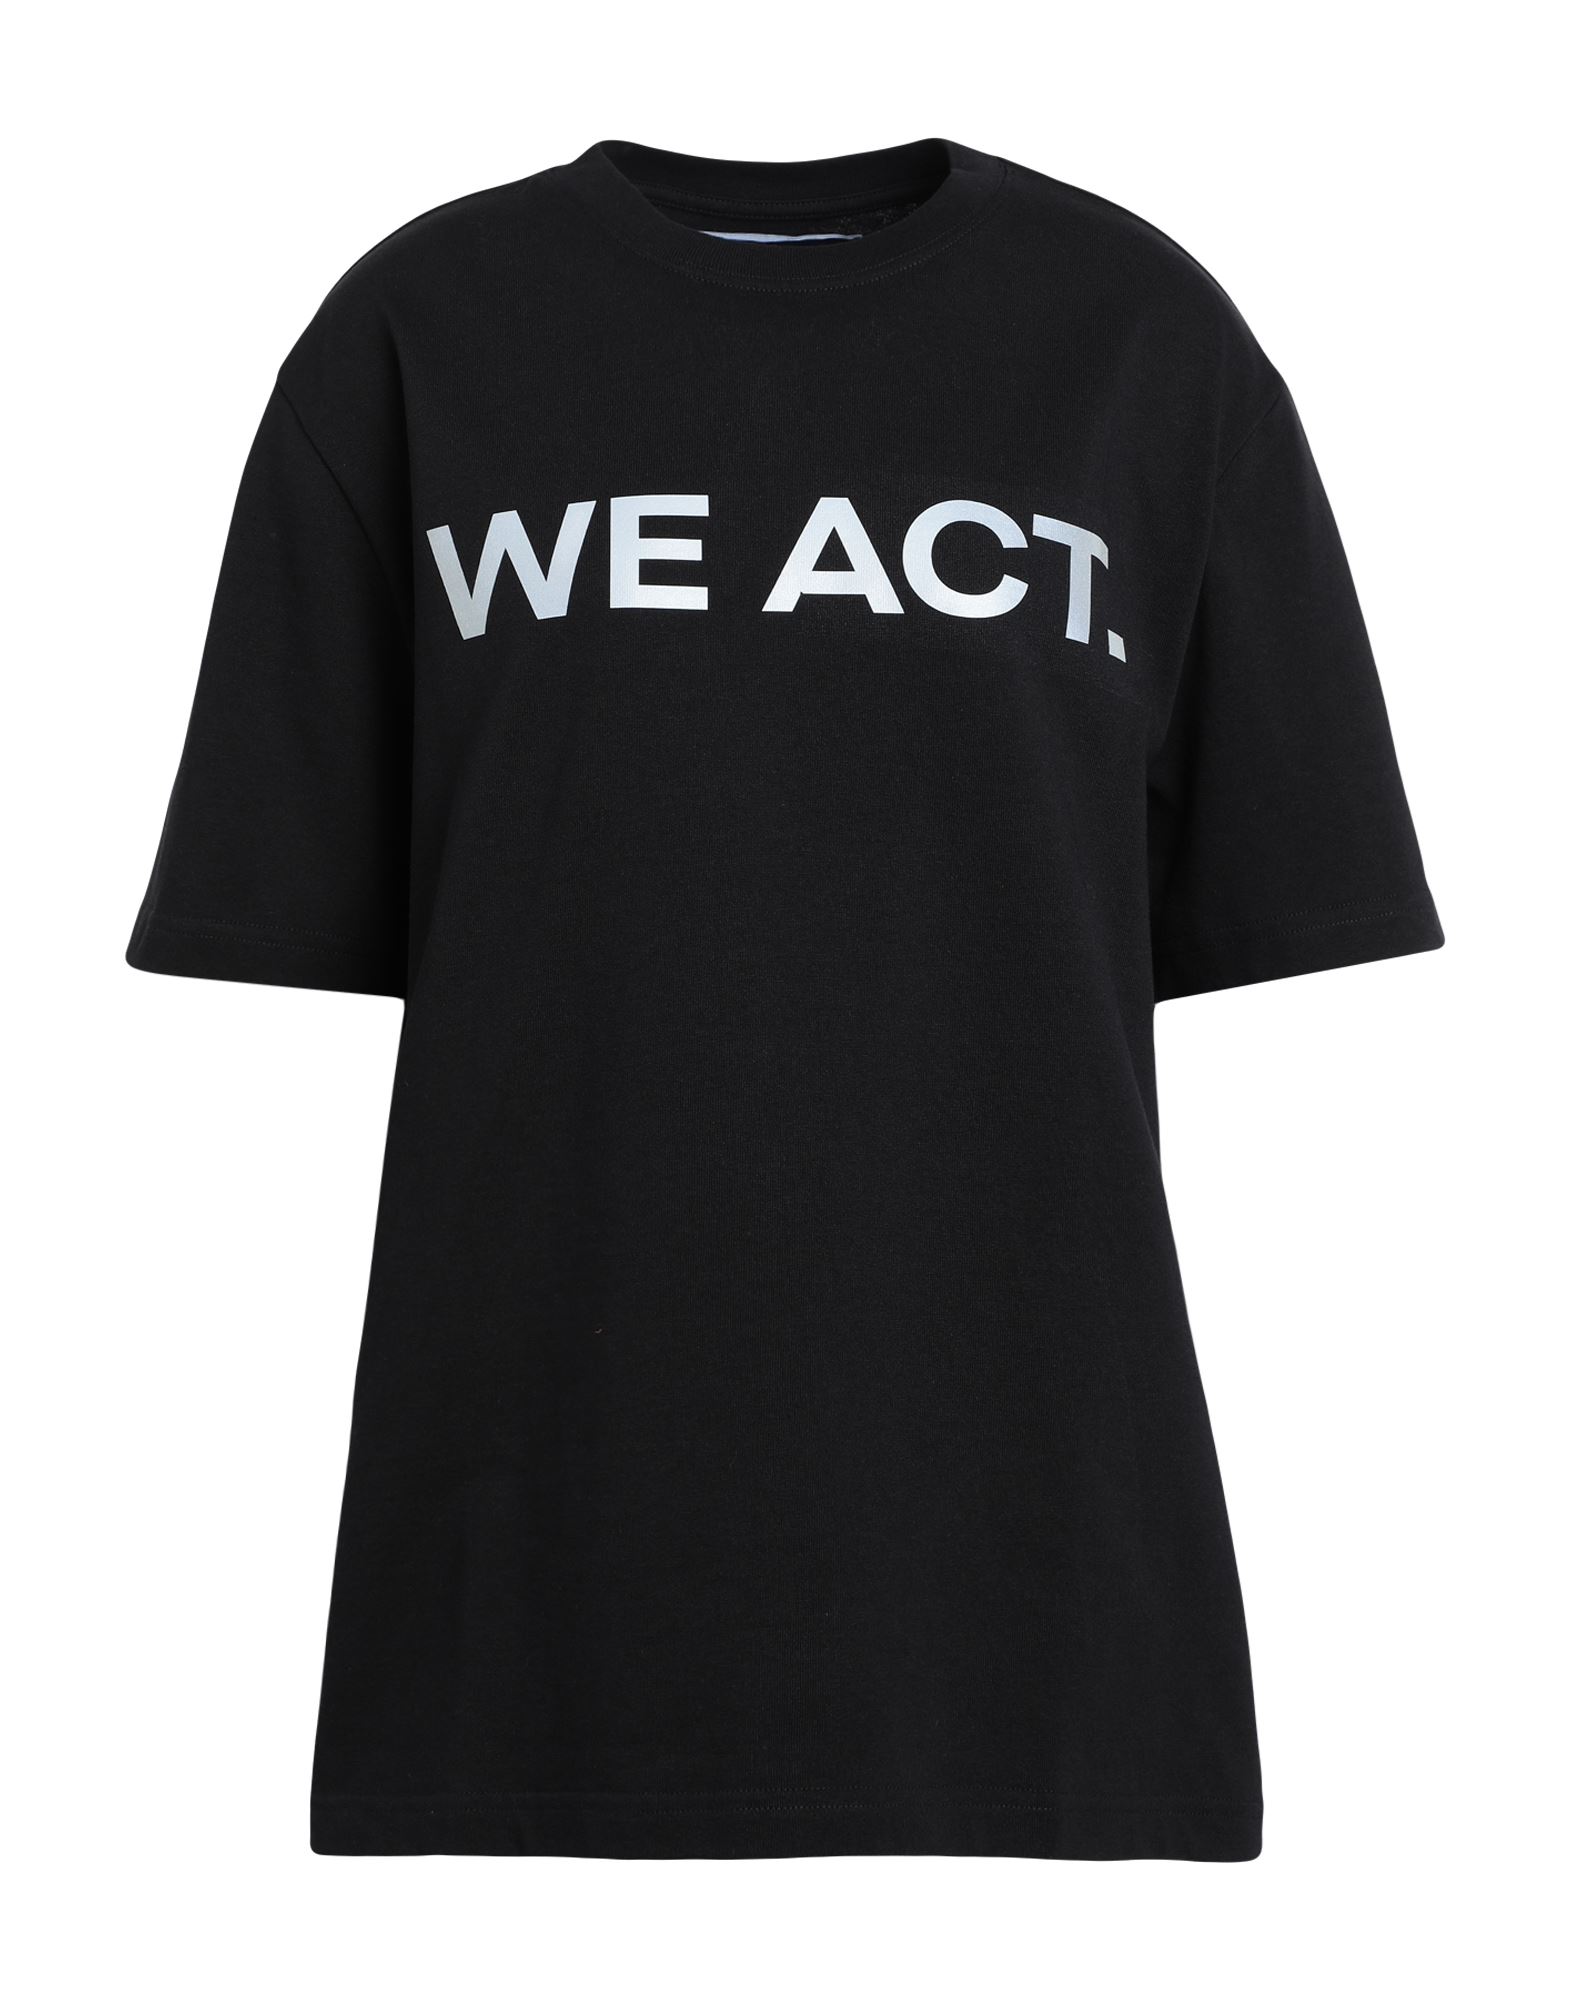 Anti-do-to T-shirt Black Size Xxl Recycled Cotton